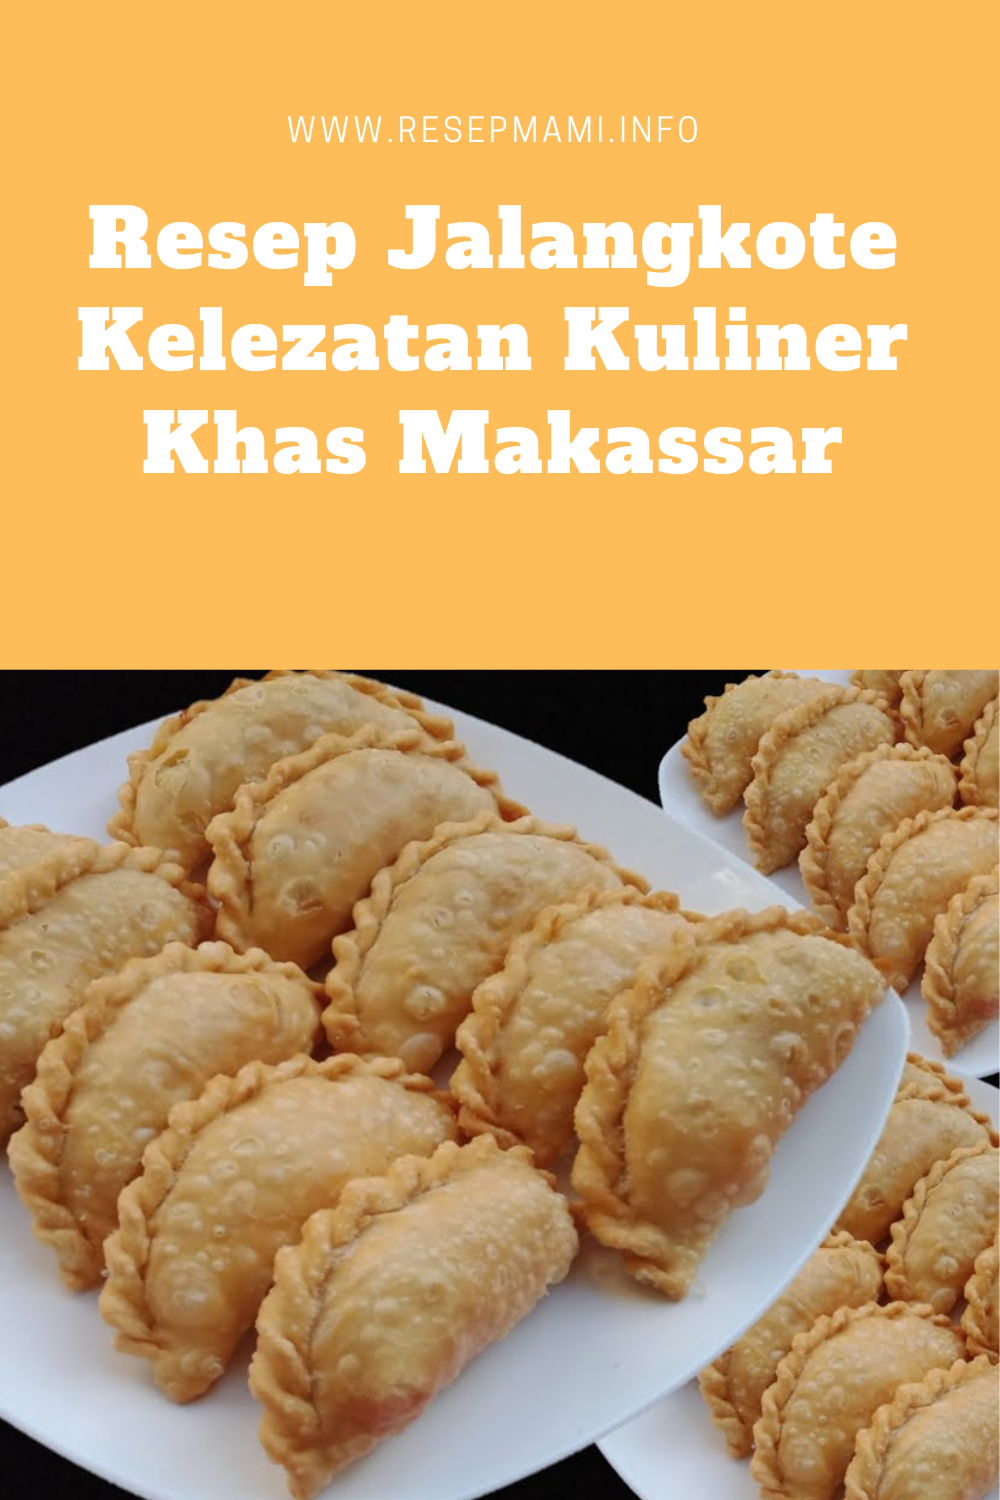 Resep Jalangkote Kelezatan Kuliner Khas Makassar